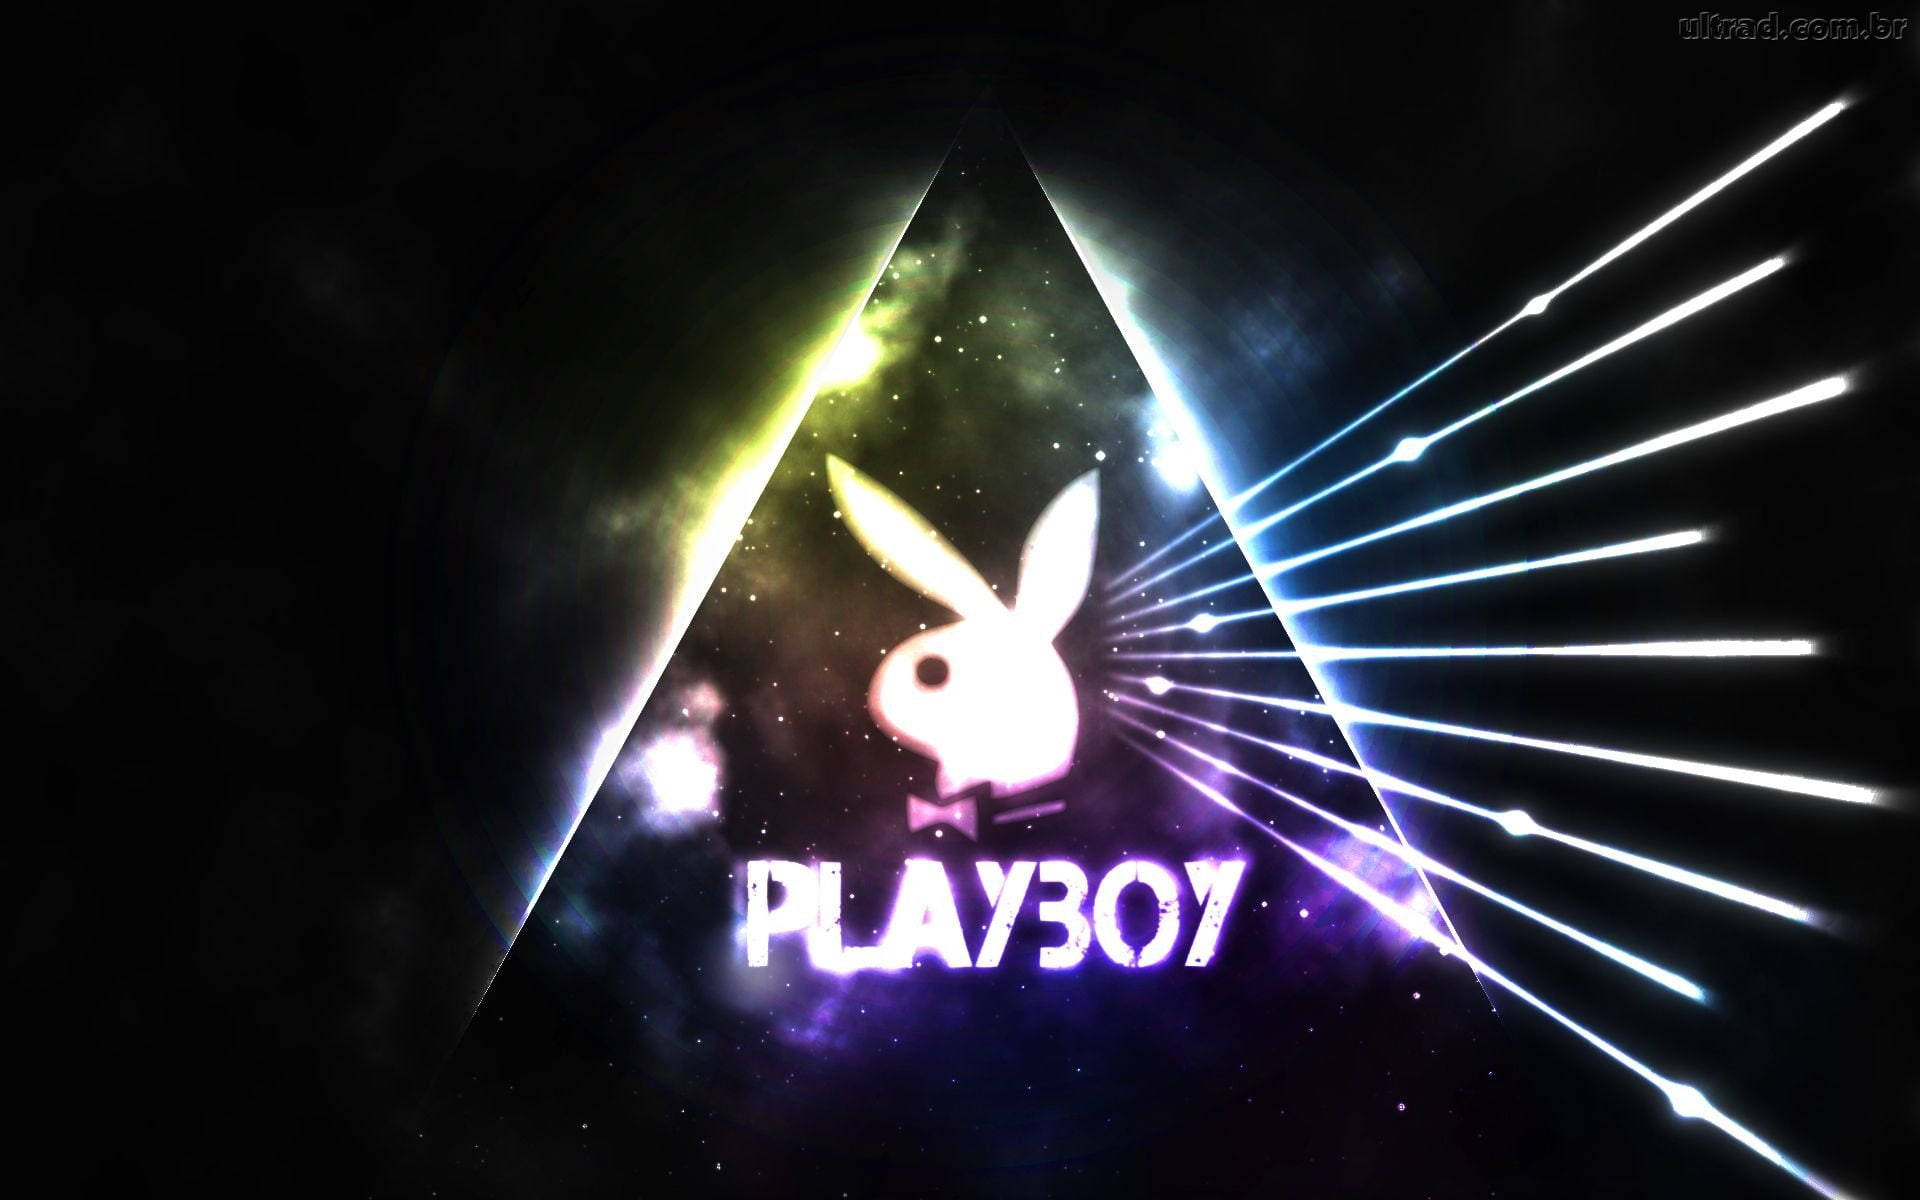 Playboy Logo With Glowing Rays